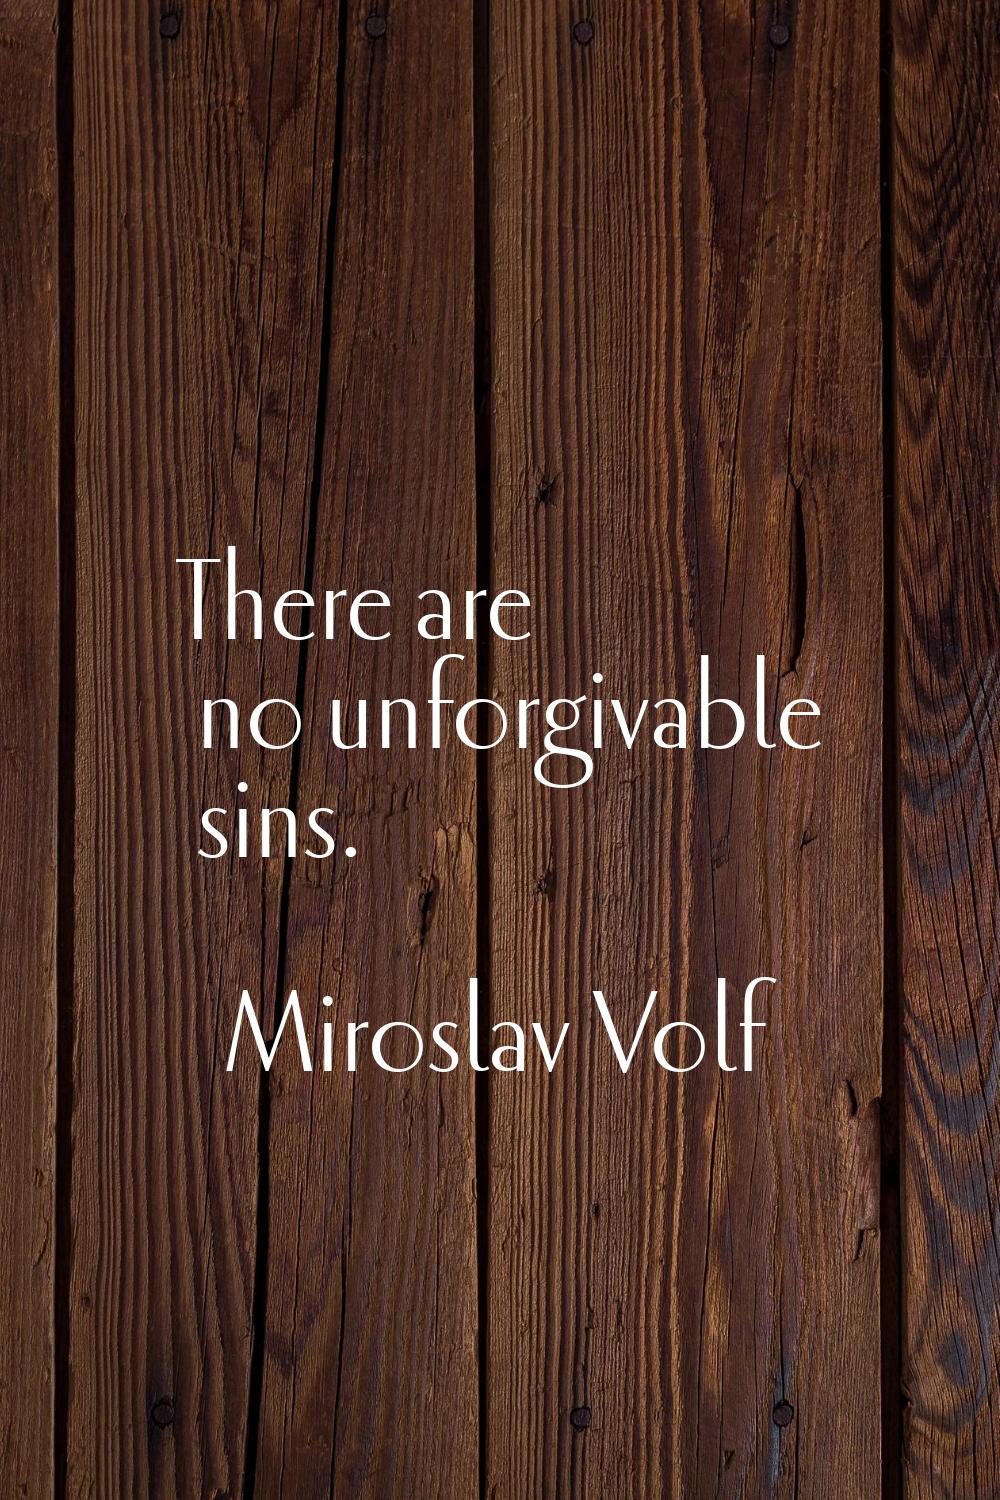 There are no unforgivable sins.